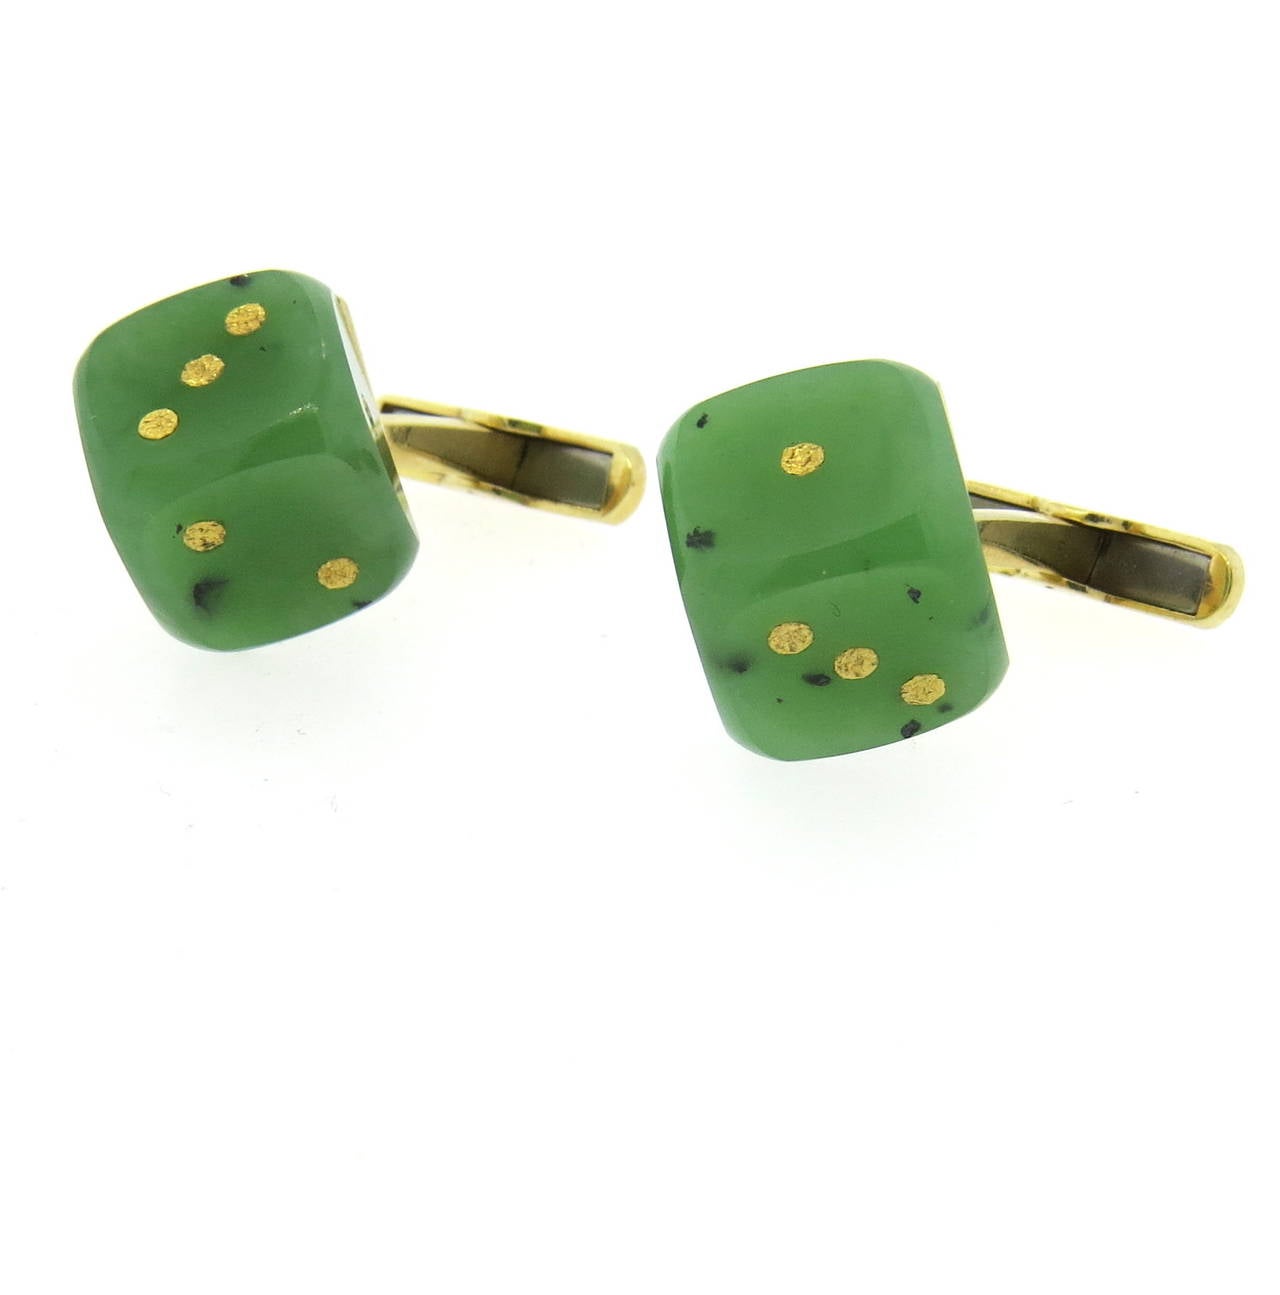 14k gold cufflinks, featuring jade top. Measuring 19mm x 20mm. Marked 14k. Weight - 21.9 grams